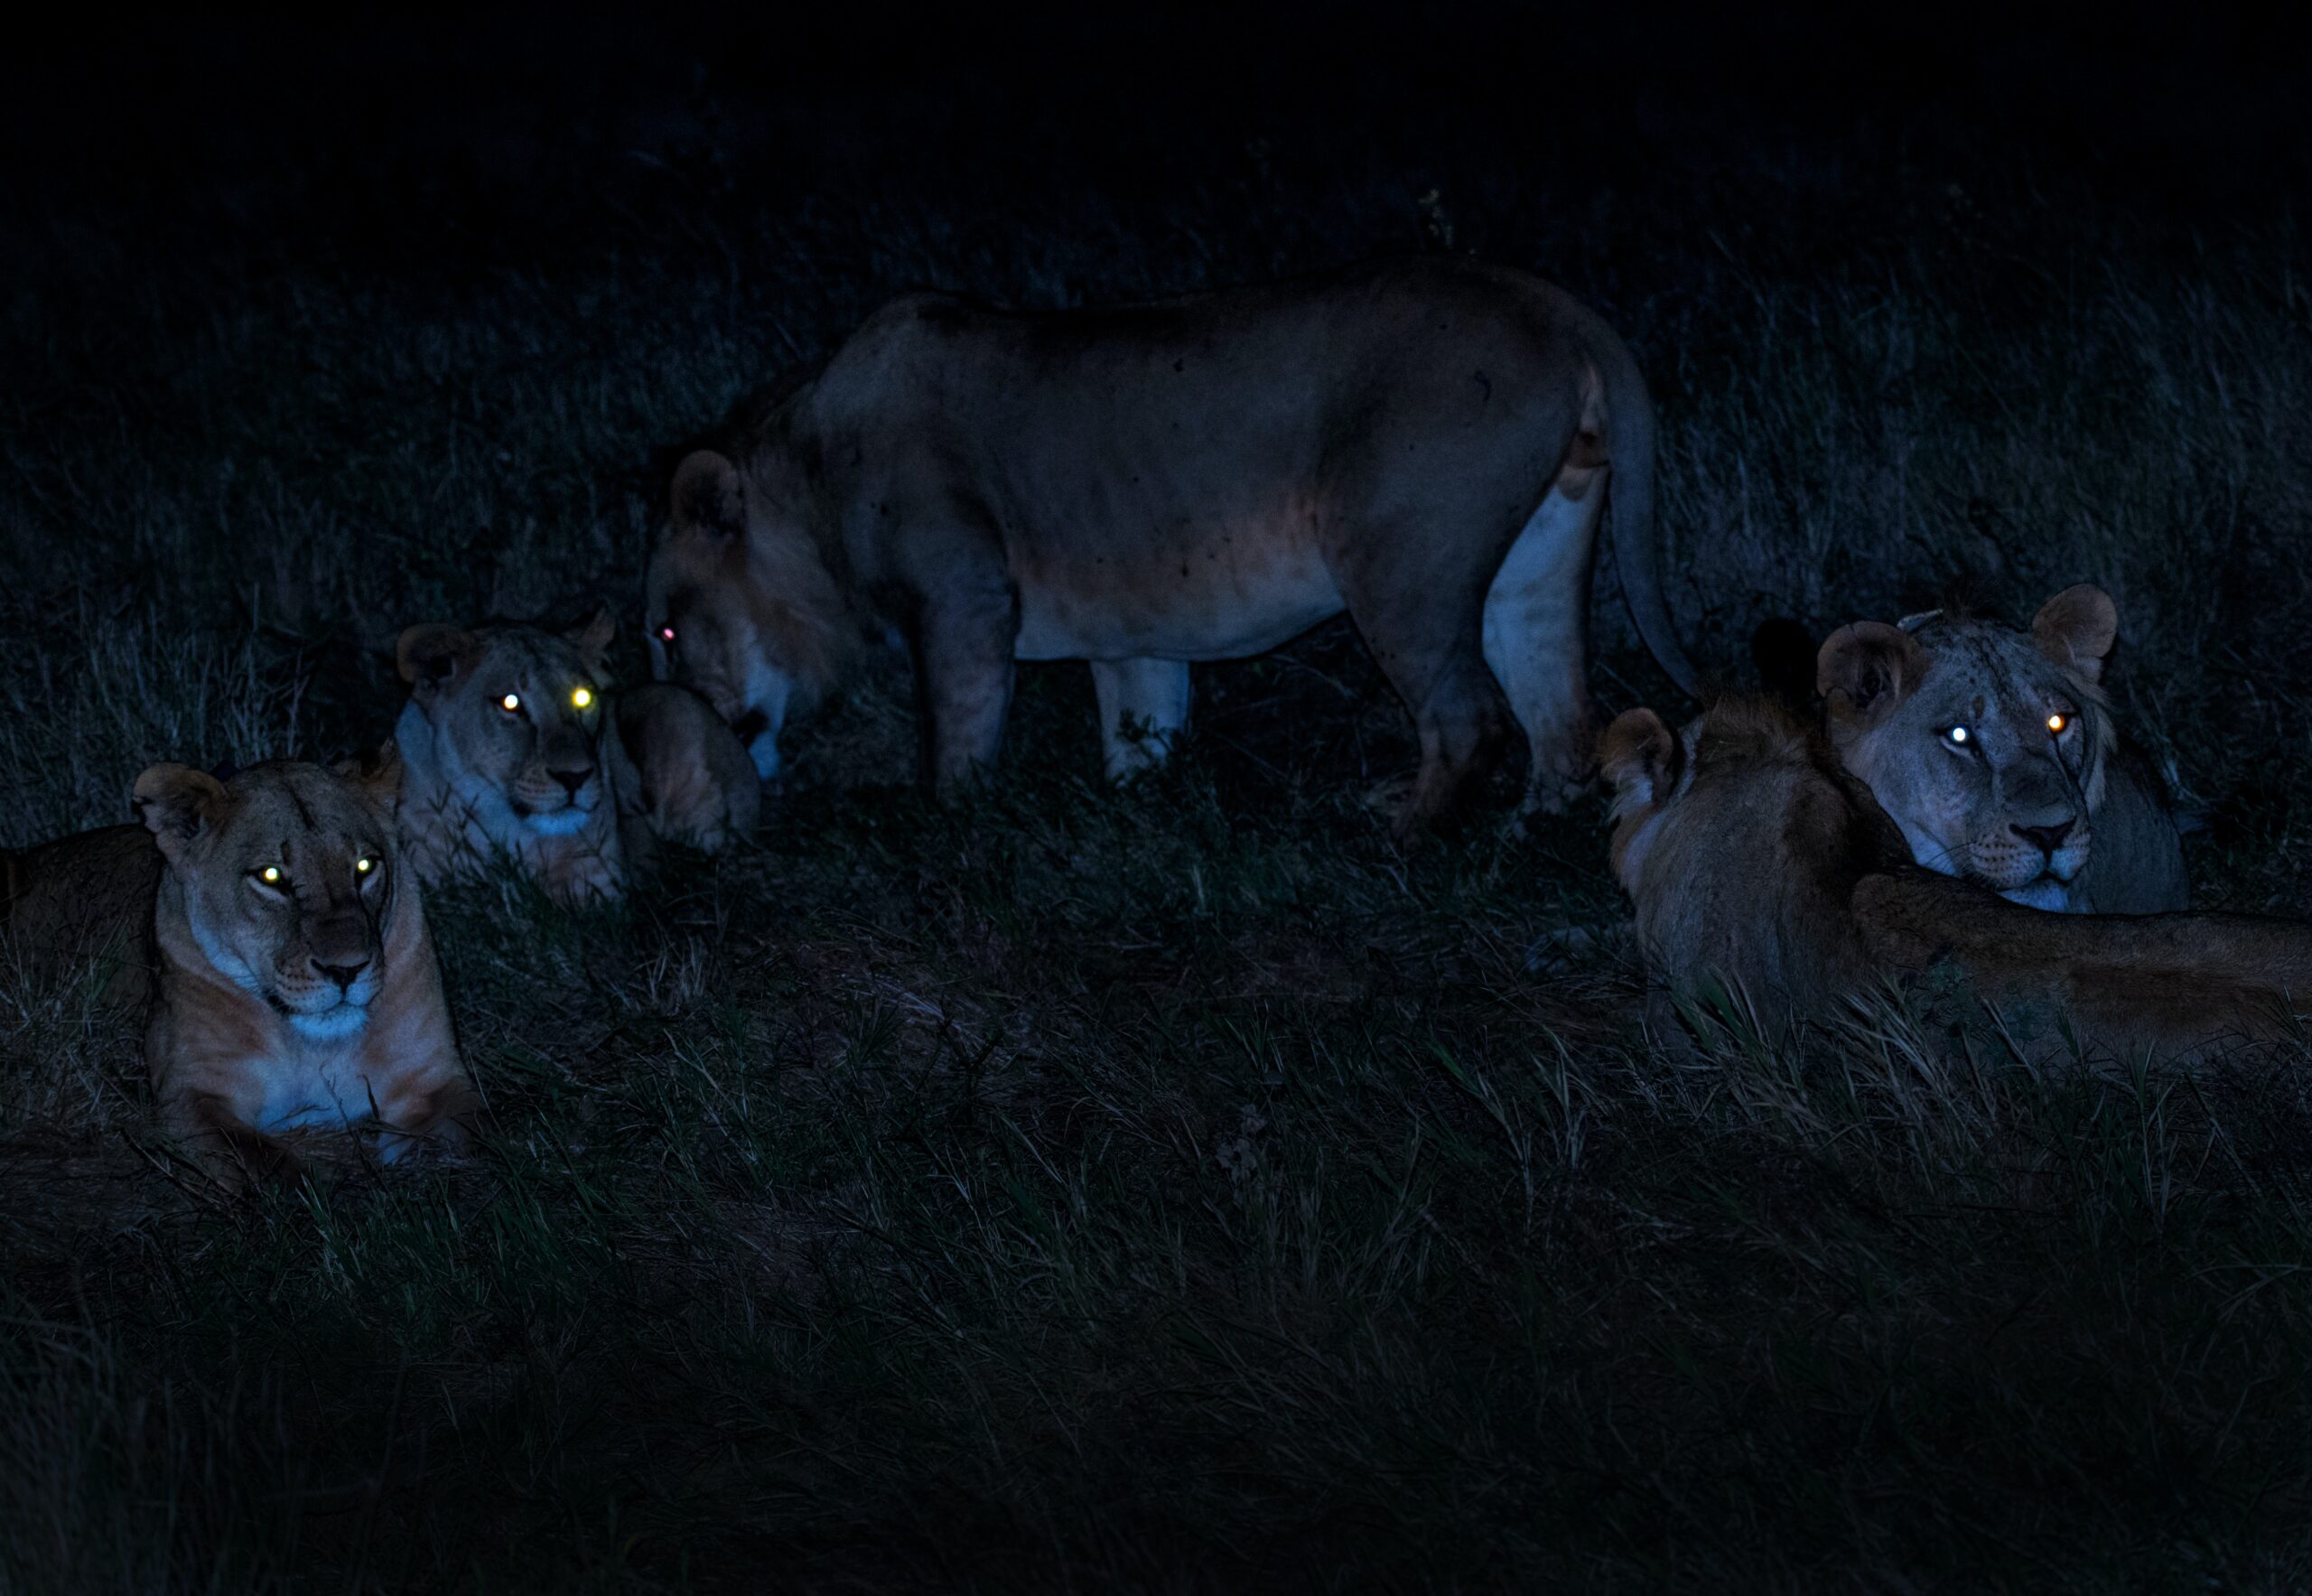 Kenya-Isiolo-Night-Wildlife-Mammal-Canine-Cougar-Puma-Foal-Zoo